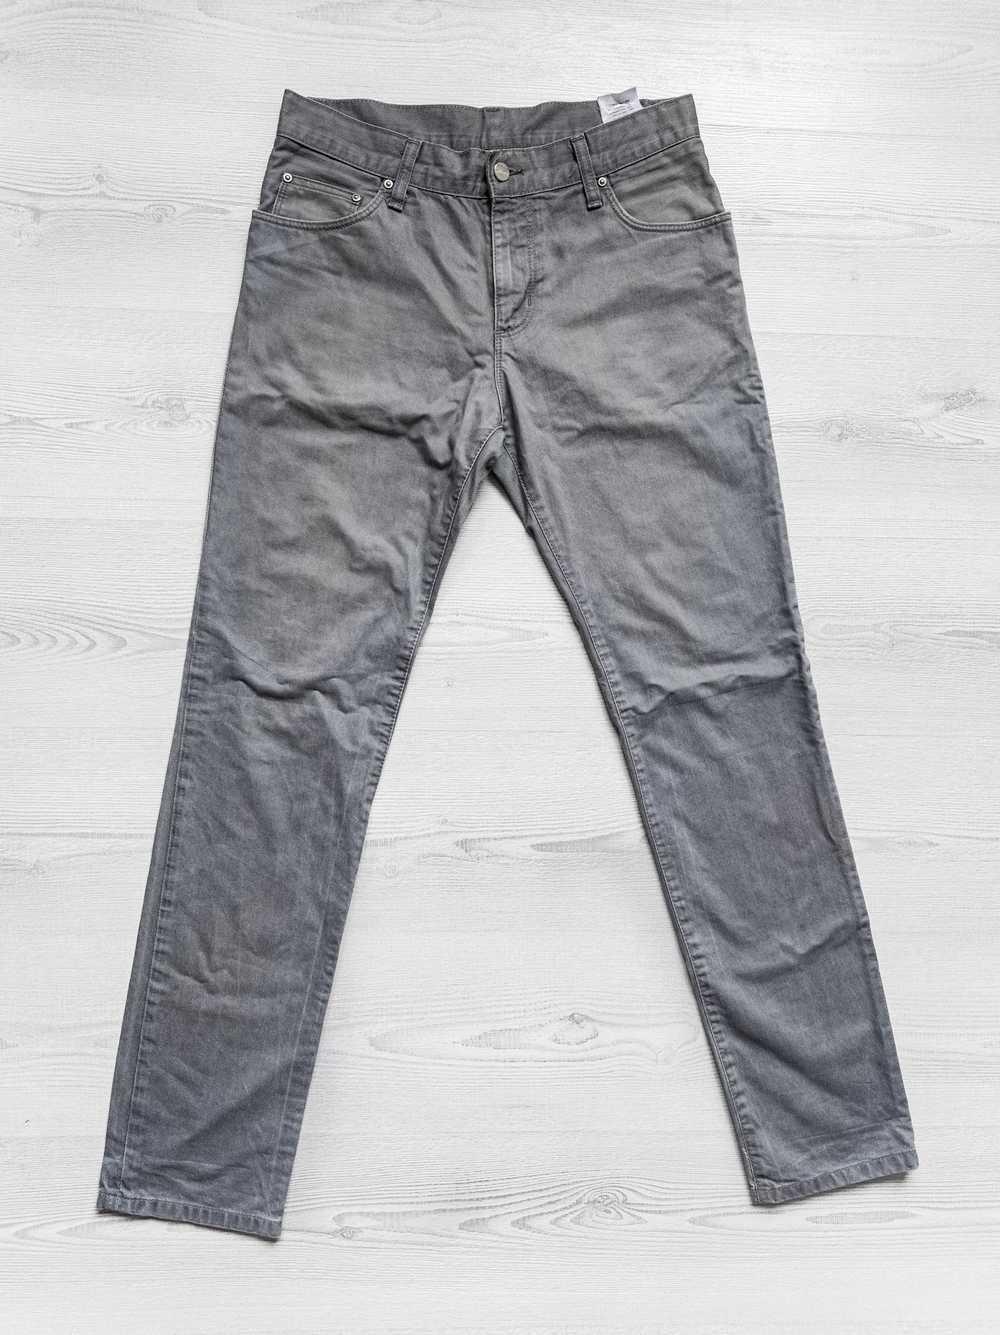 Carhartt × Vintage Carhartt Men's Jeans - image 1